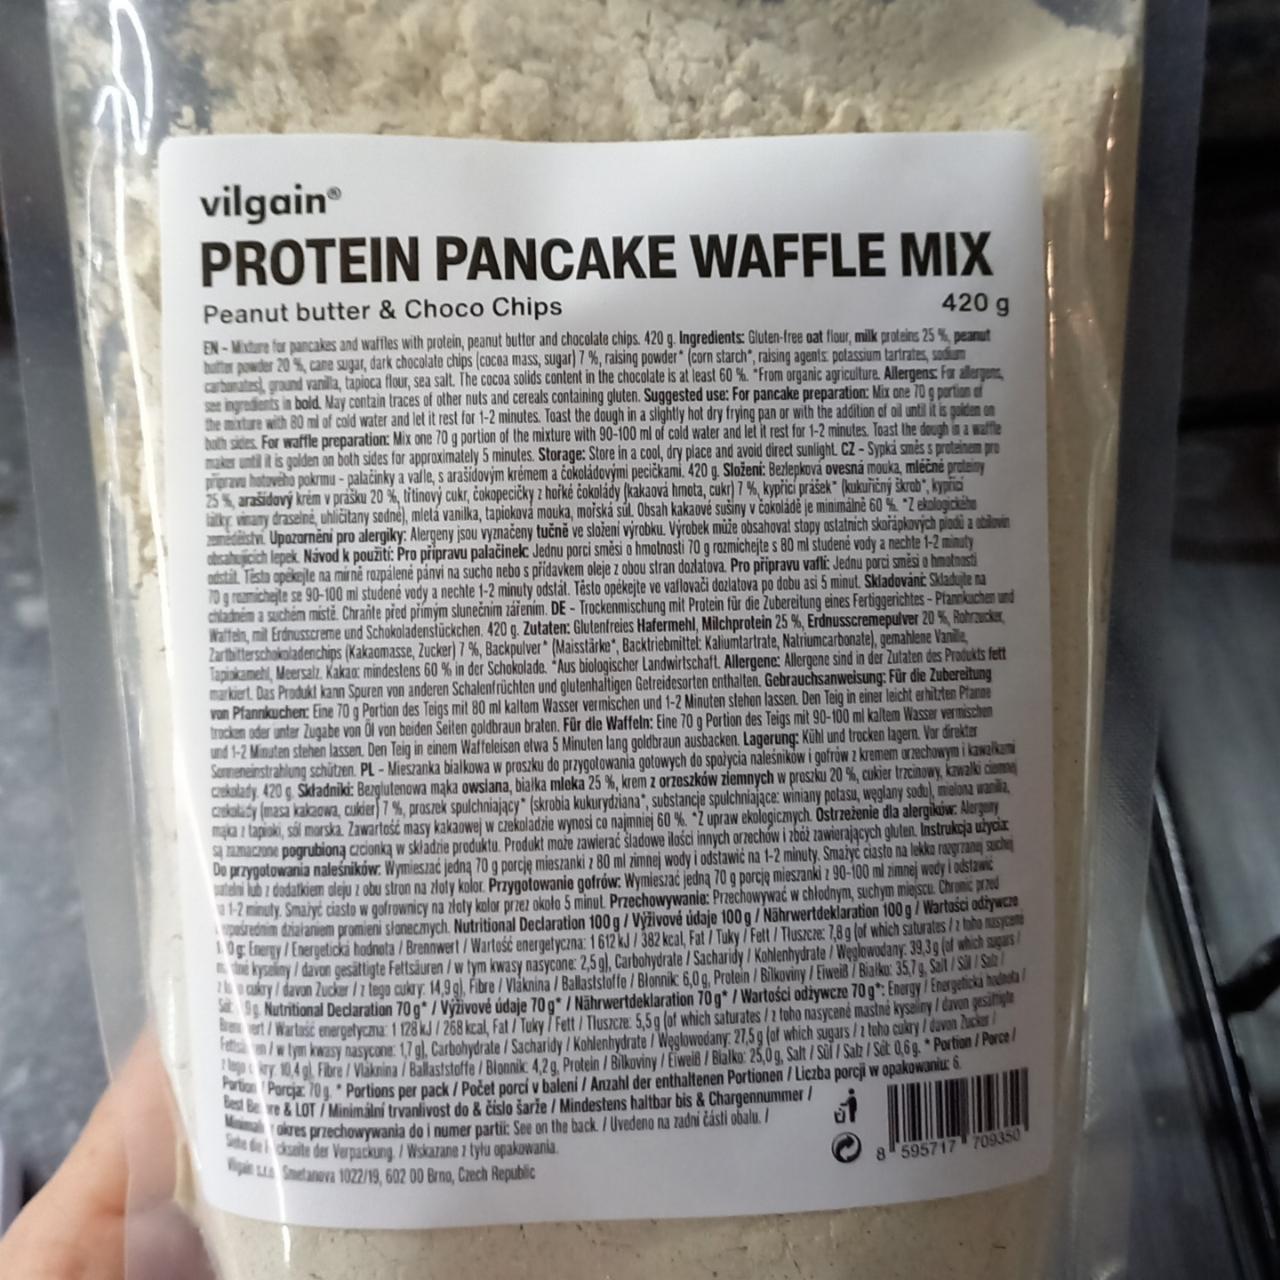 Fotografie - Protein Pancake Waffle Mix Peanut butter & Choco Chips Vilgain